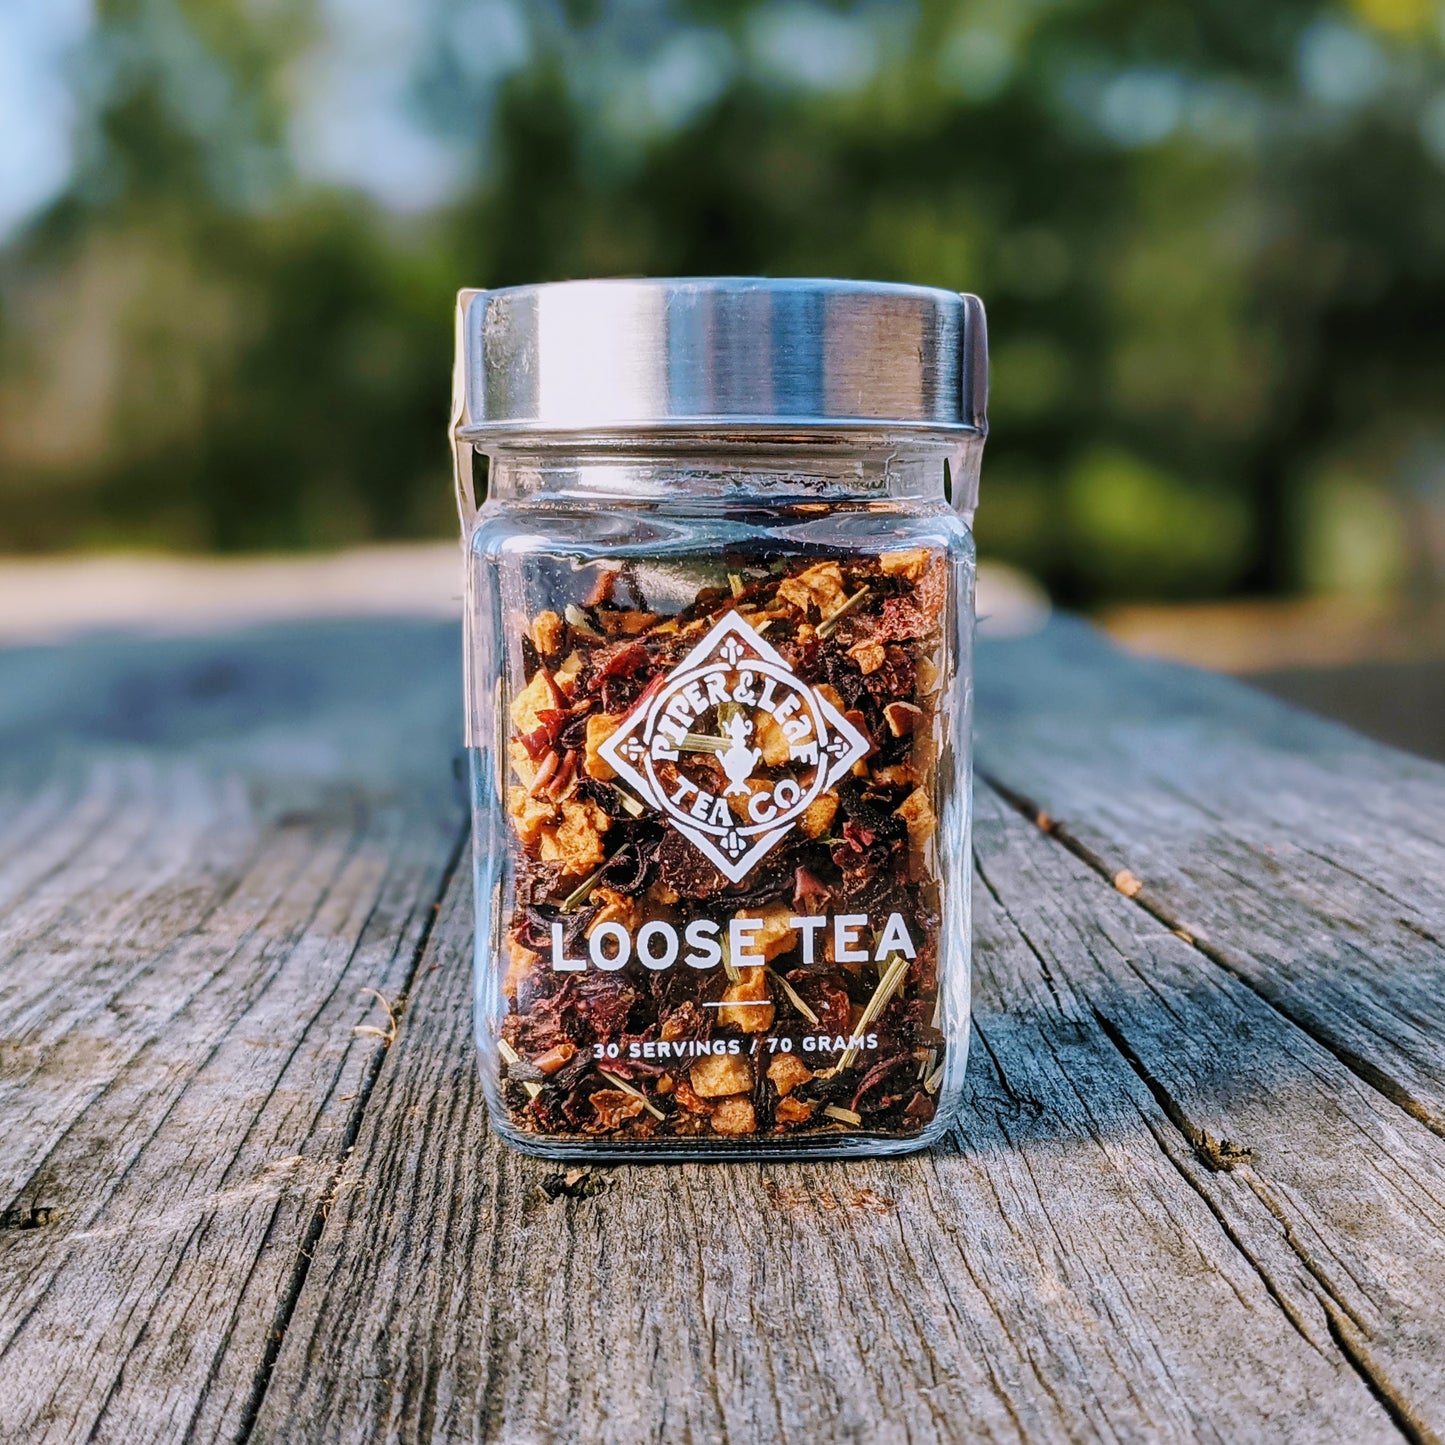 Strawberry Shindig Glass Jar of Loose Leaf Tea - 30 Servings